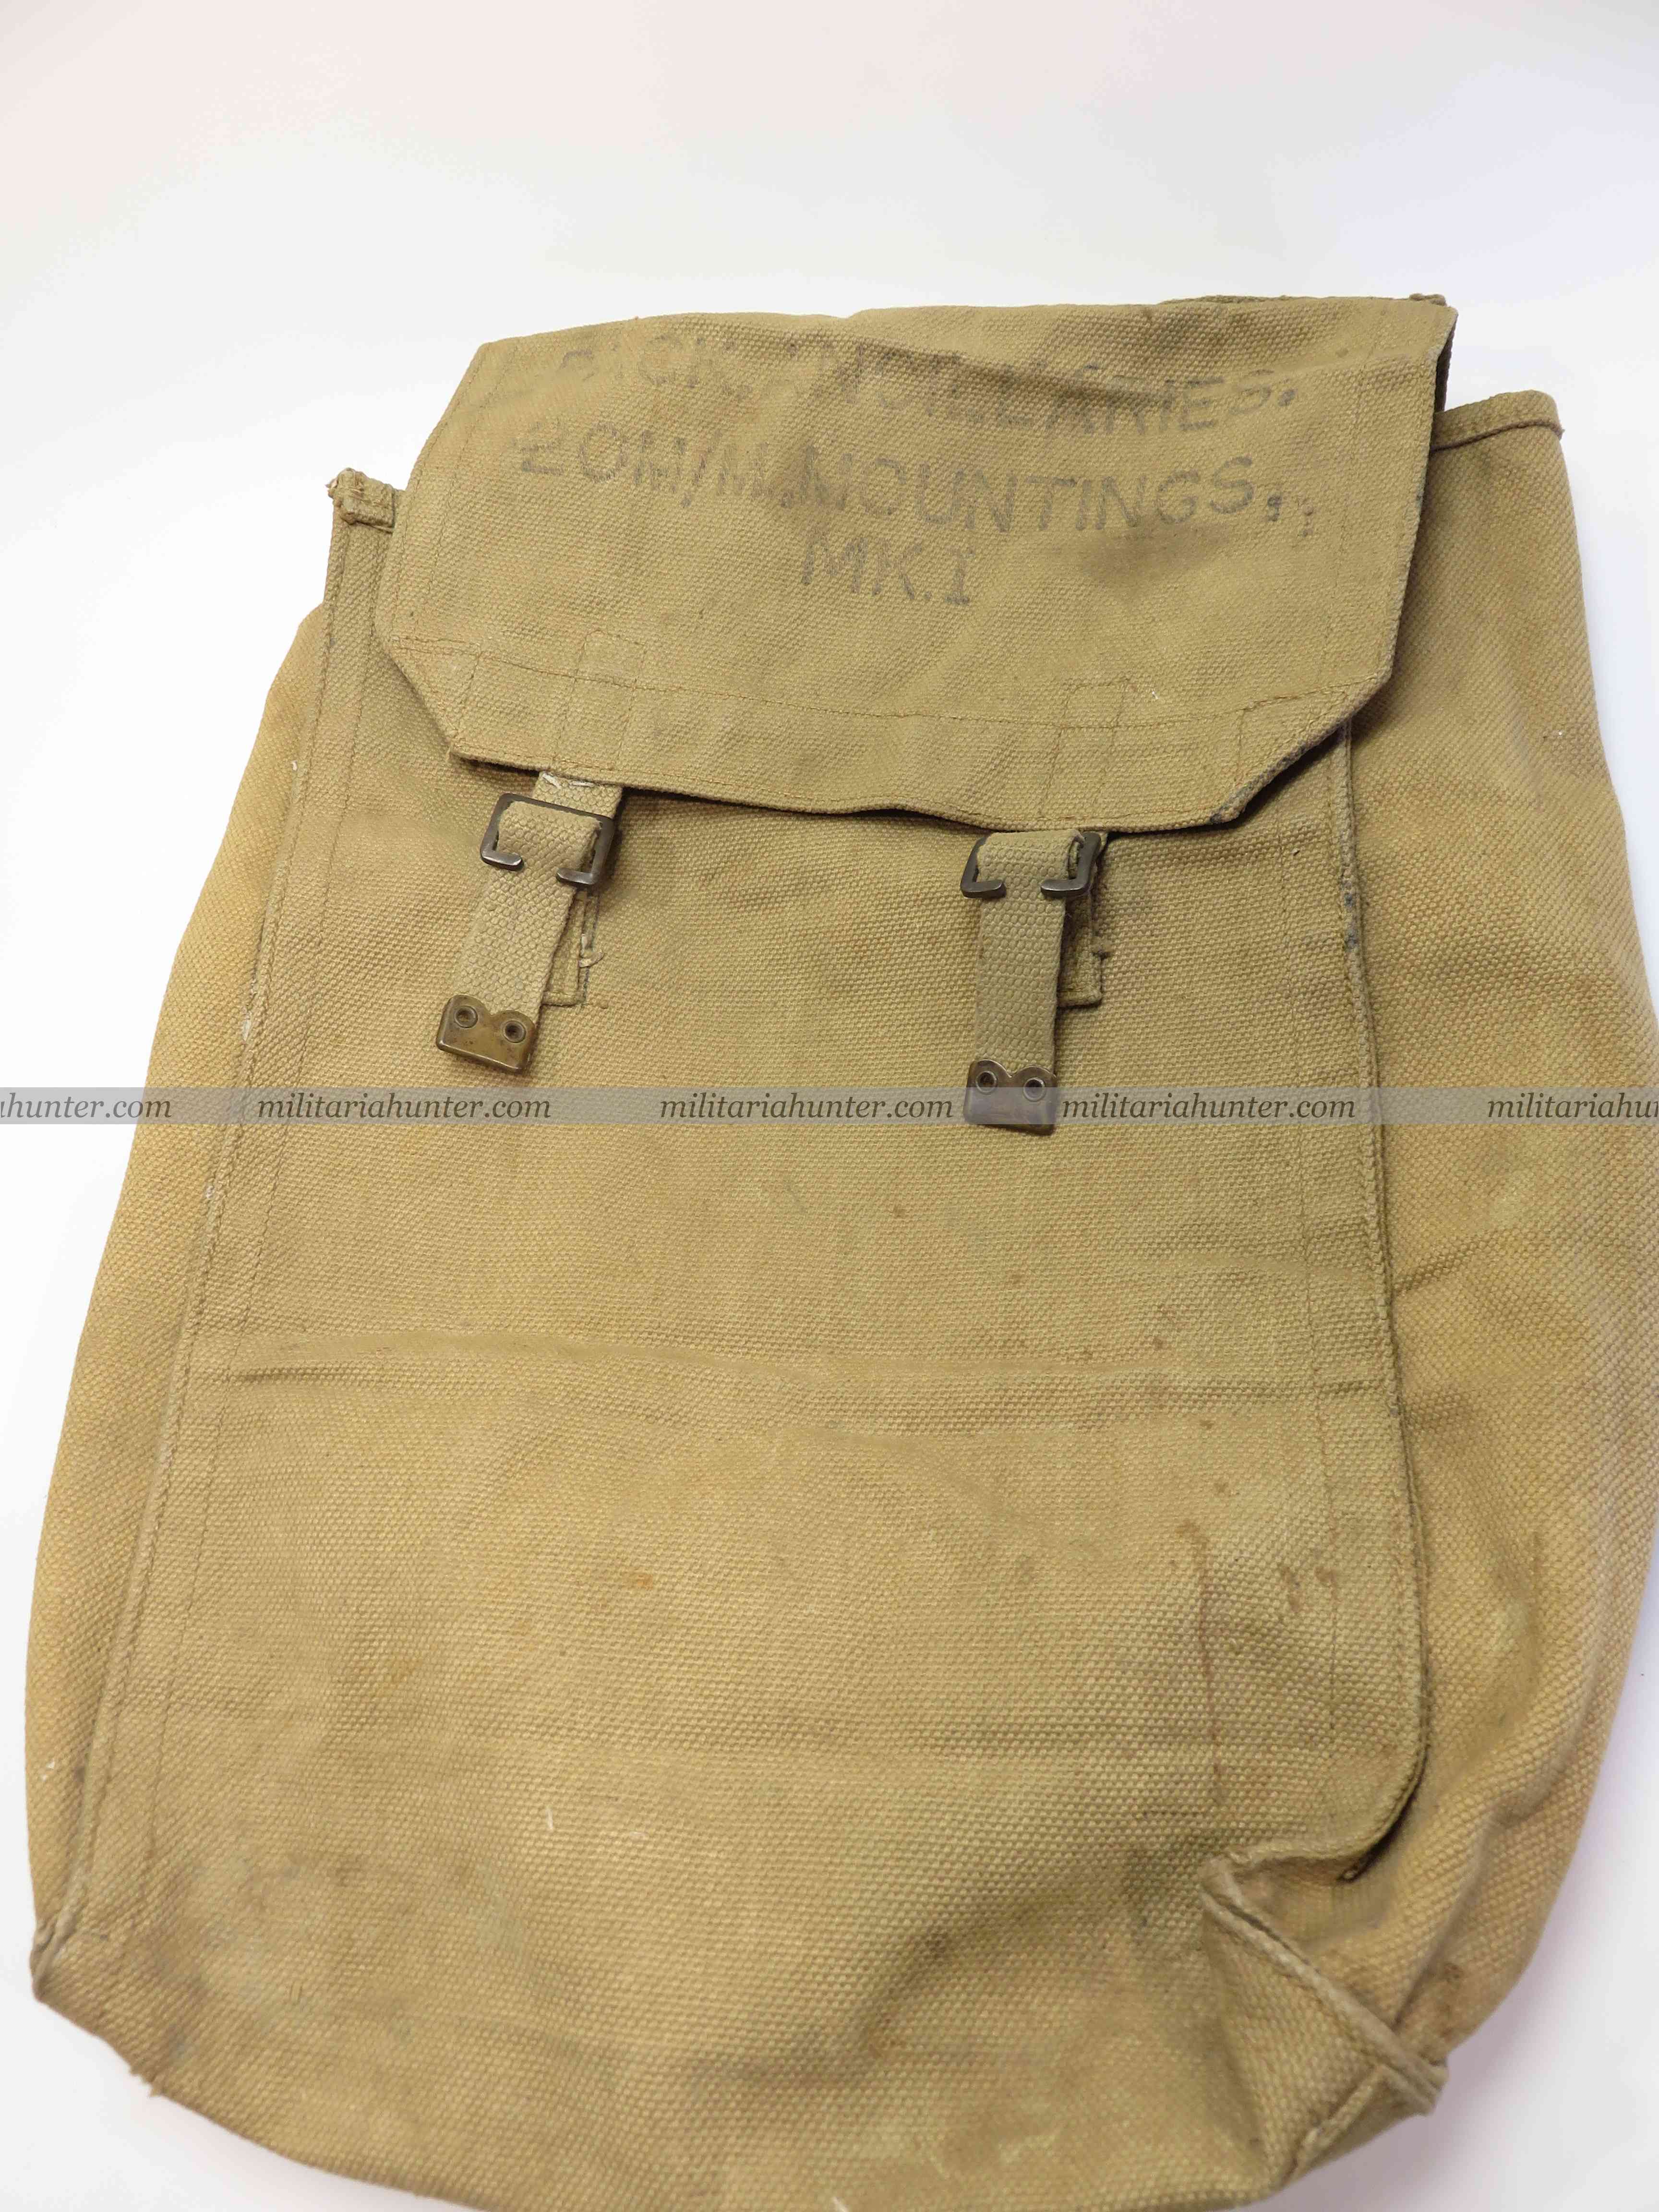 militaria : WW2 20mm accessories pack - sac pour accessoires du 20mmAA